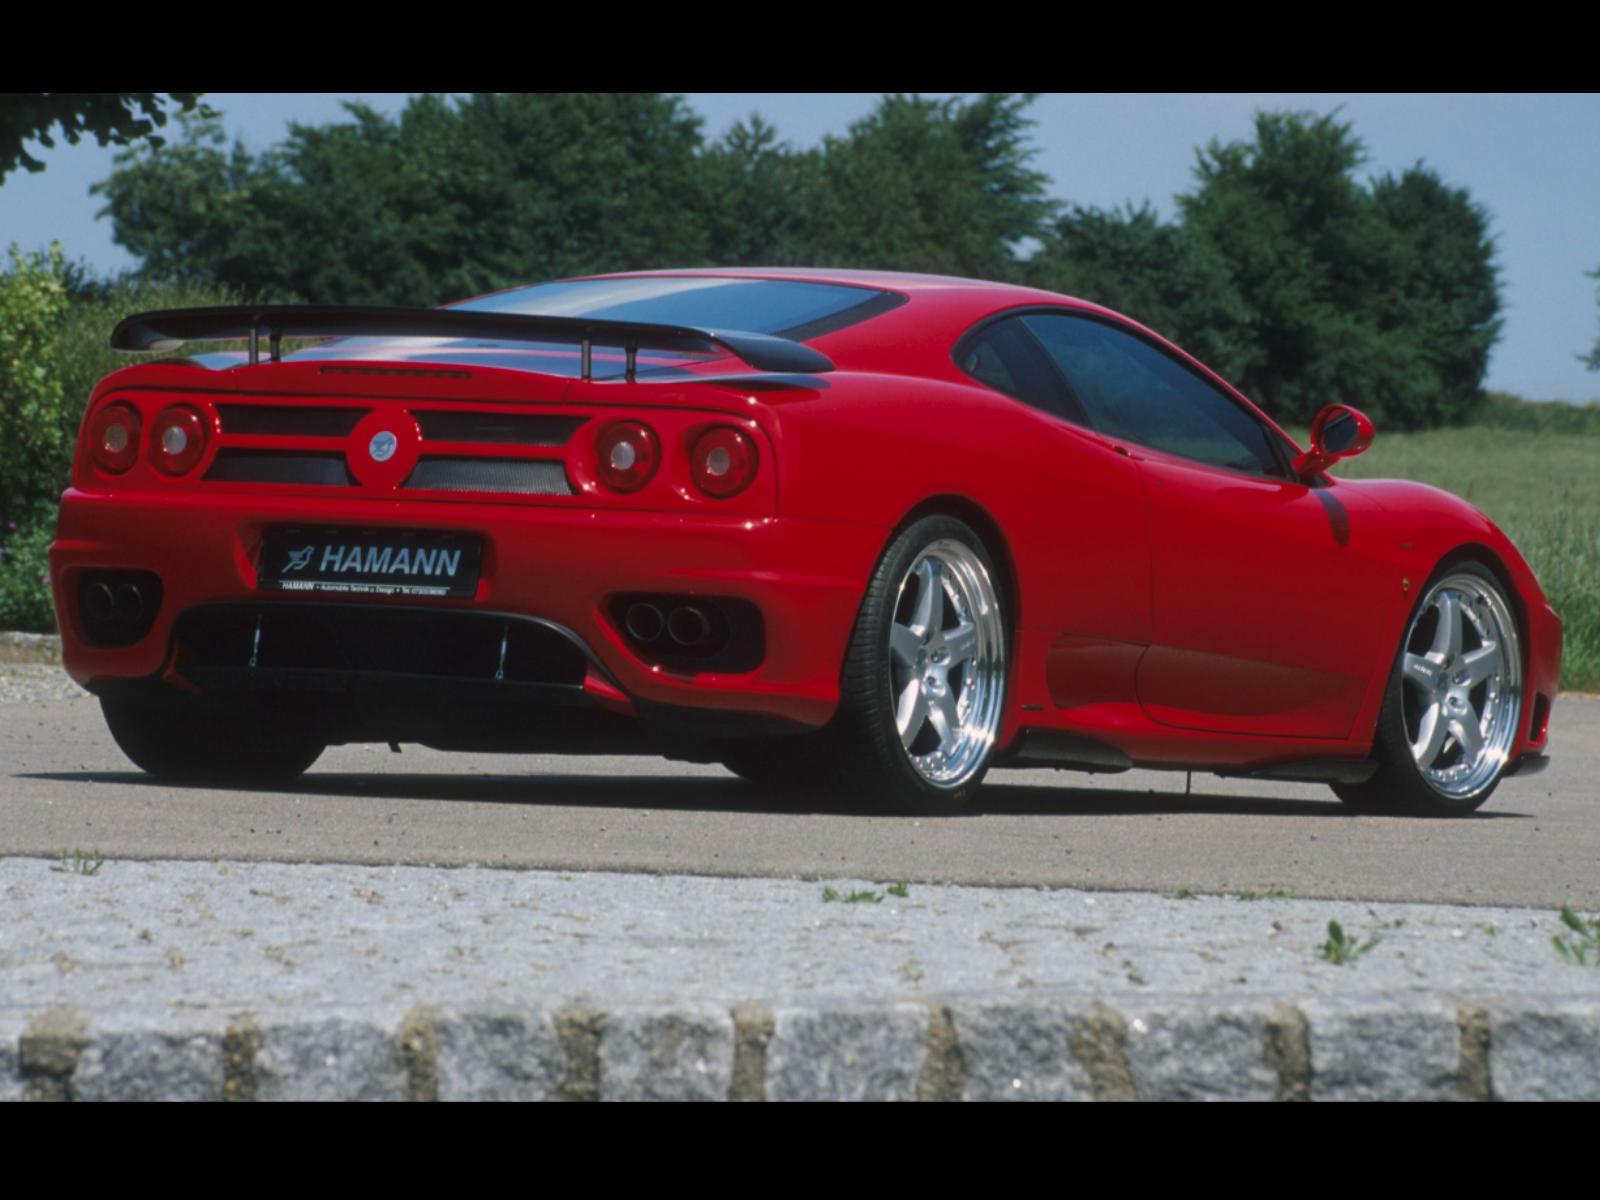 Ferrari 360_Hamann_Modena_mp20_pic_17291